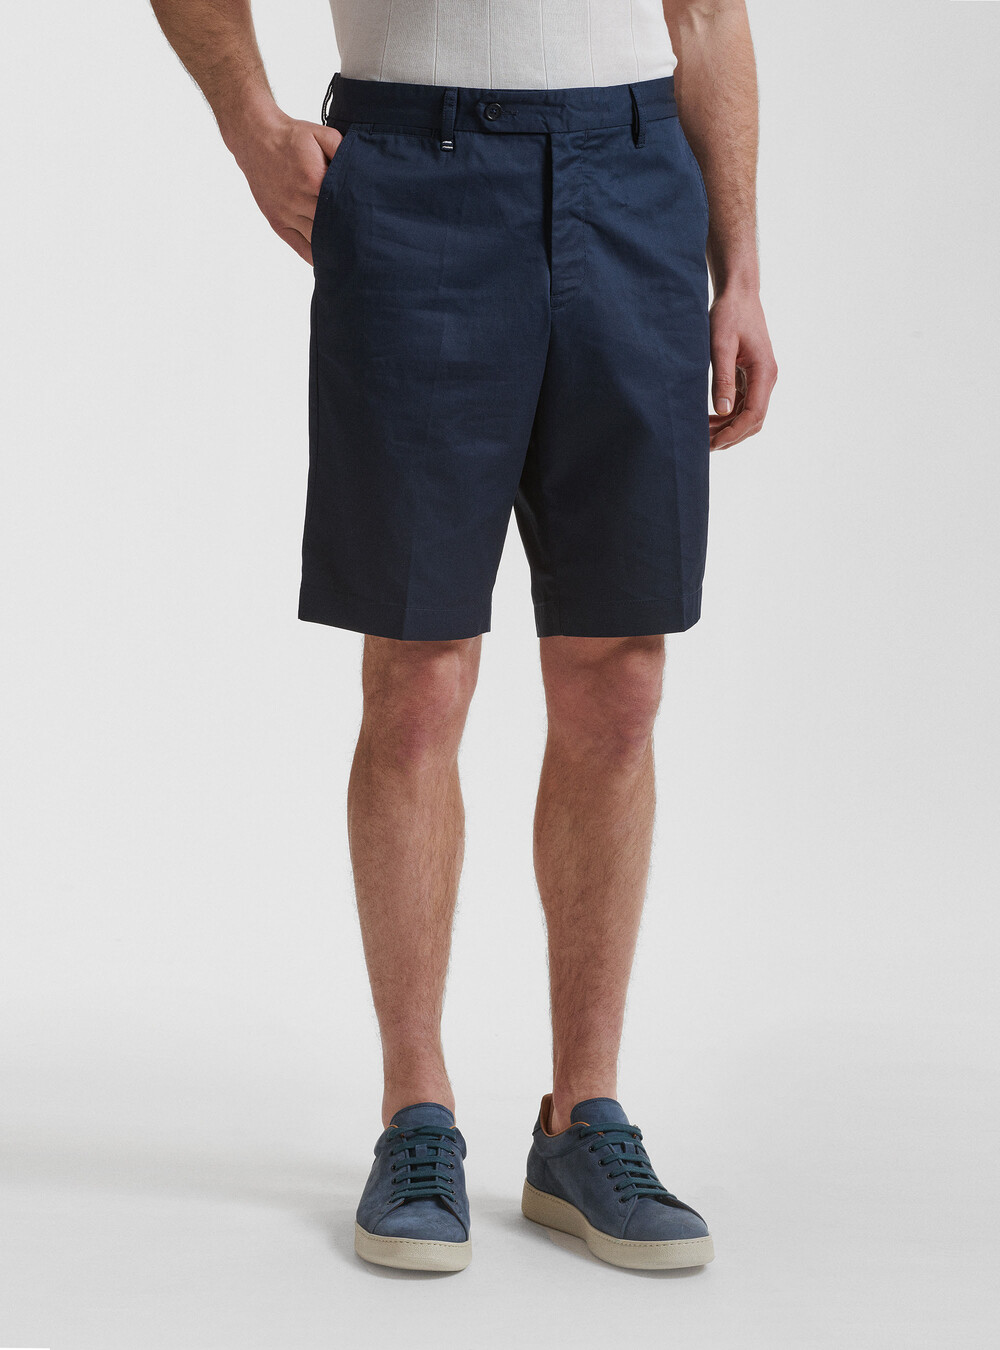 Lightweight twill shorts, GutteridgeUS